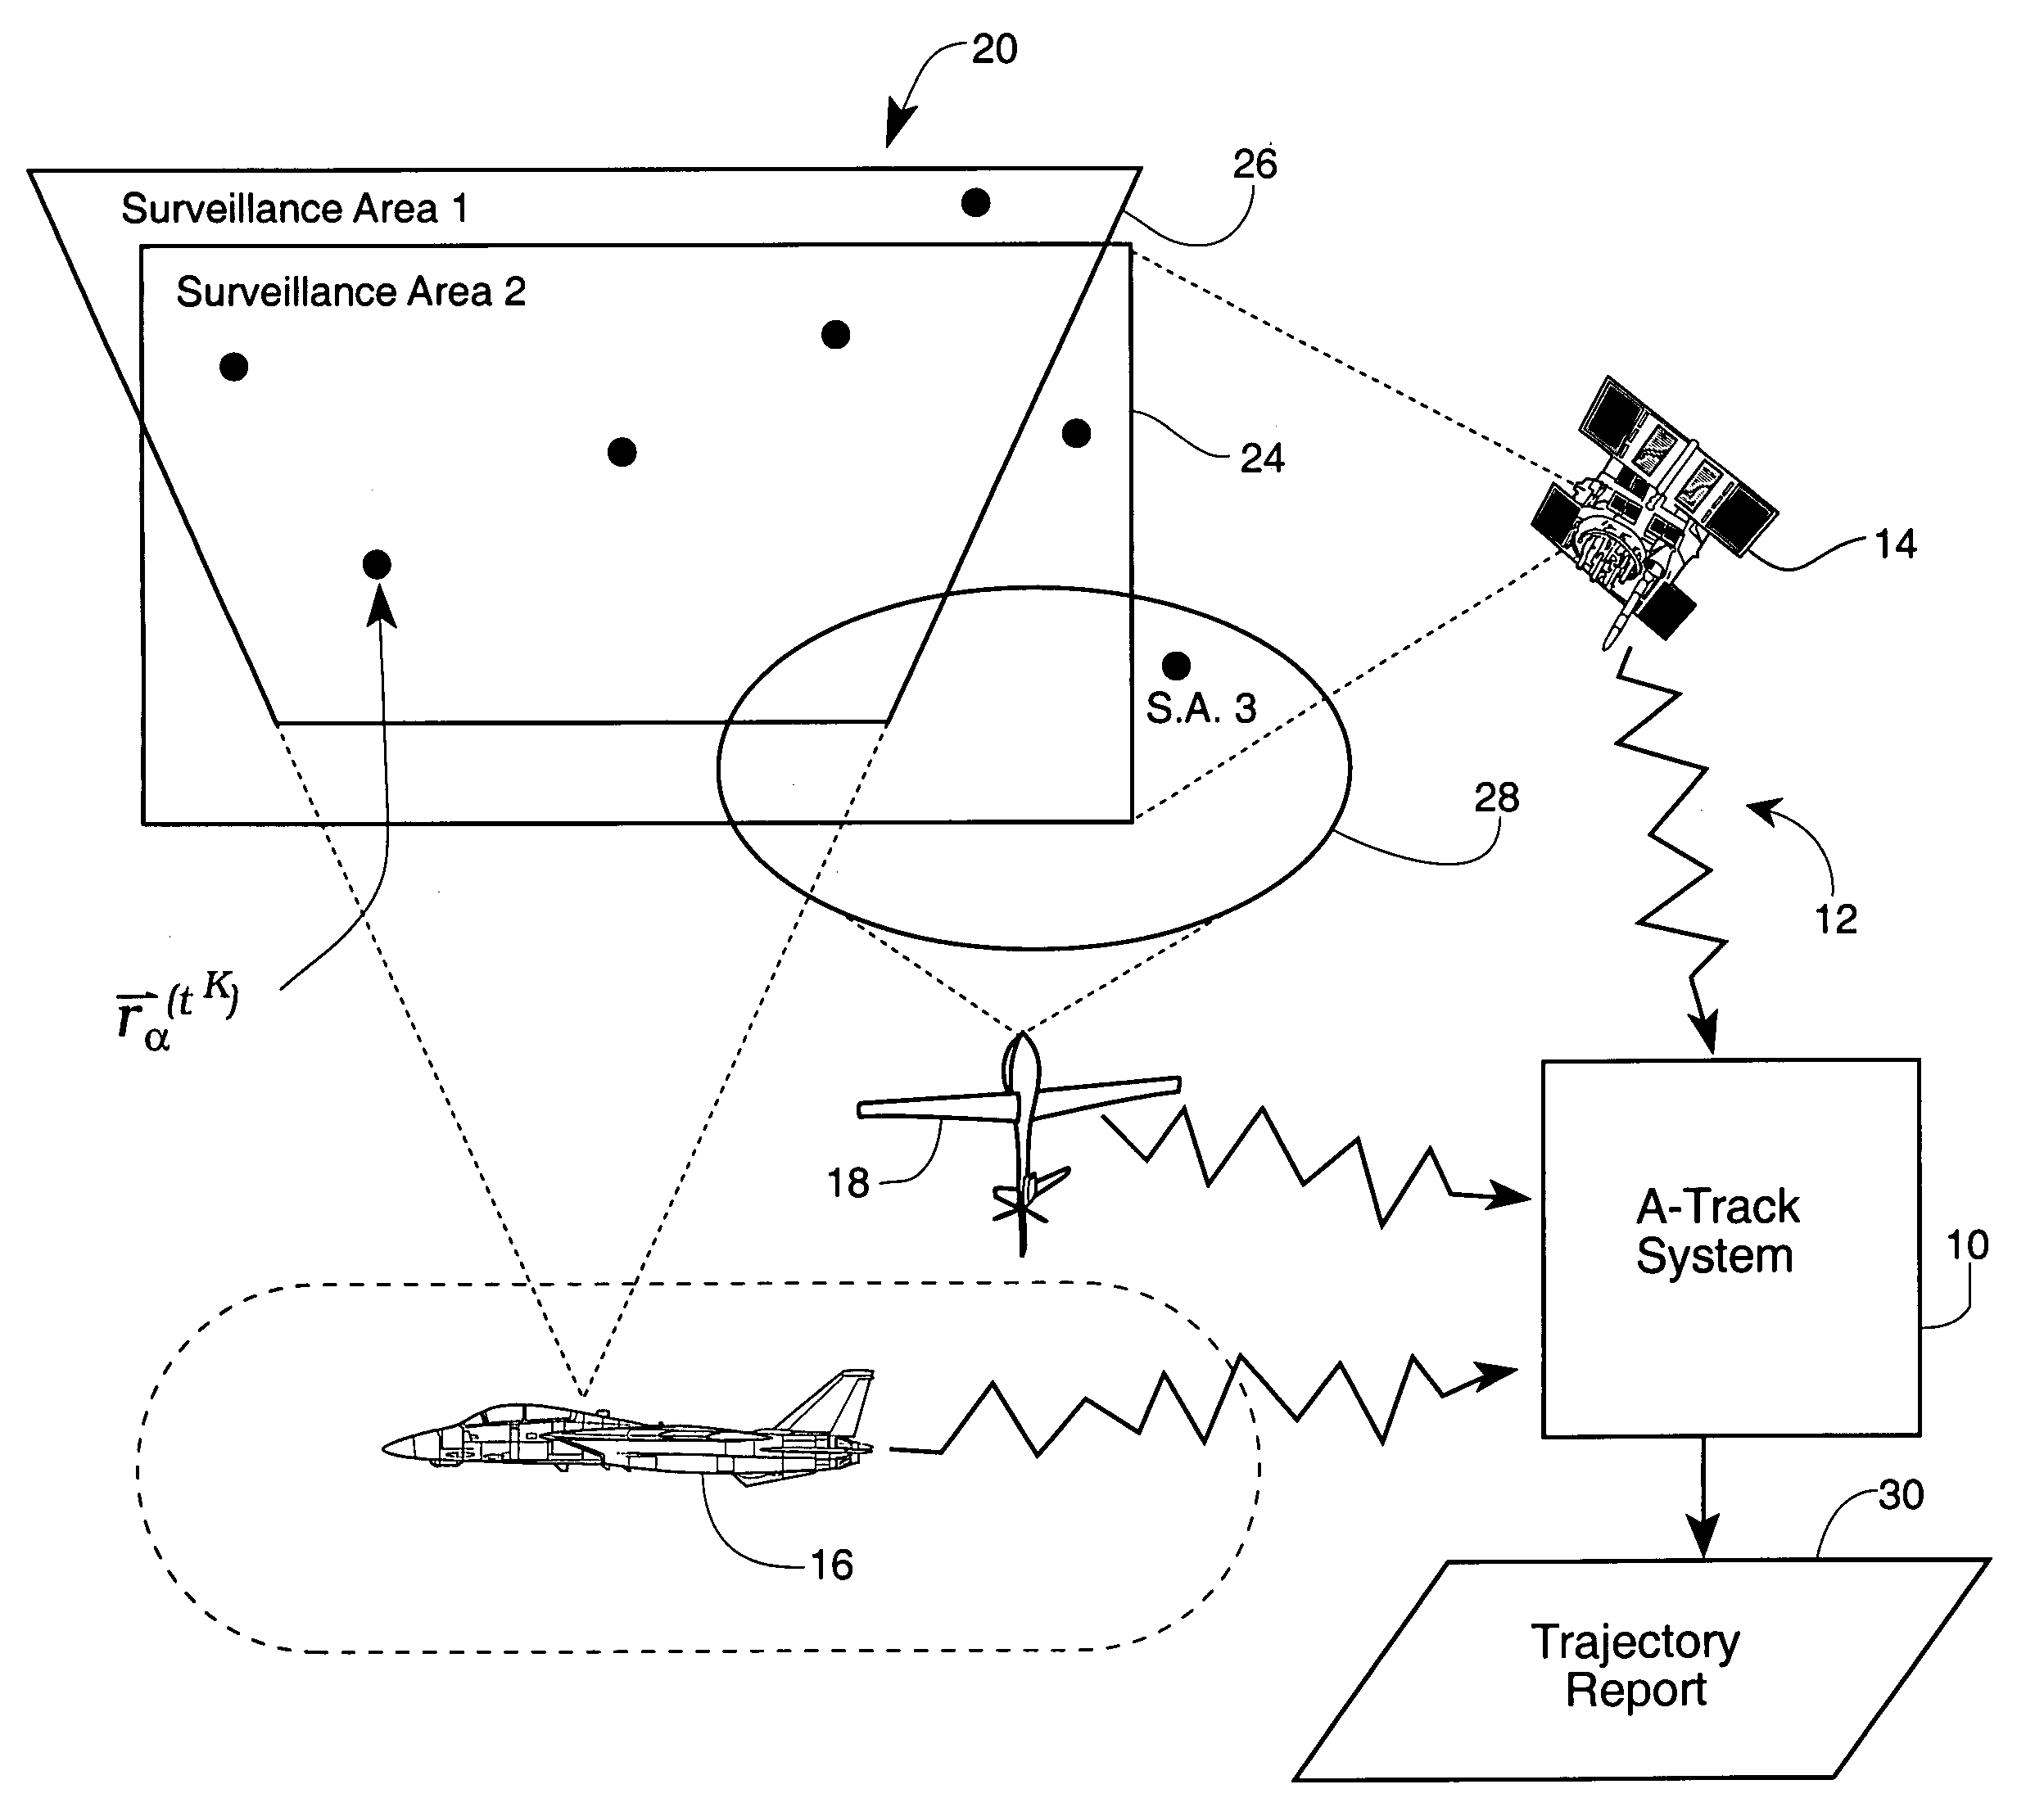 ATR trajectory tracking system (A-Track)